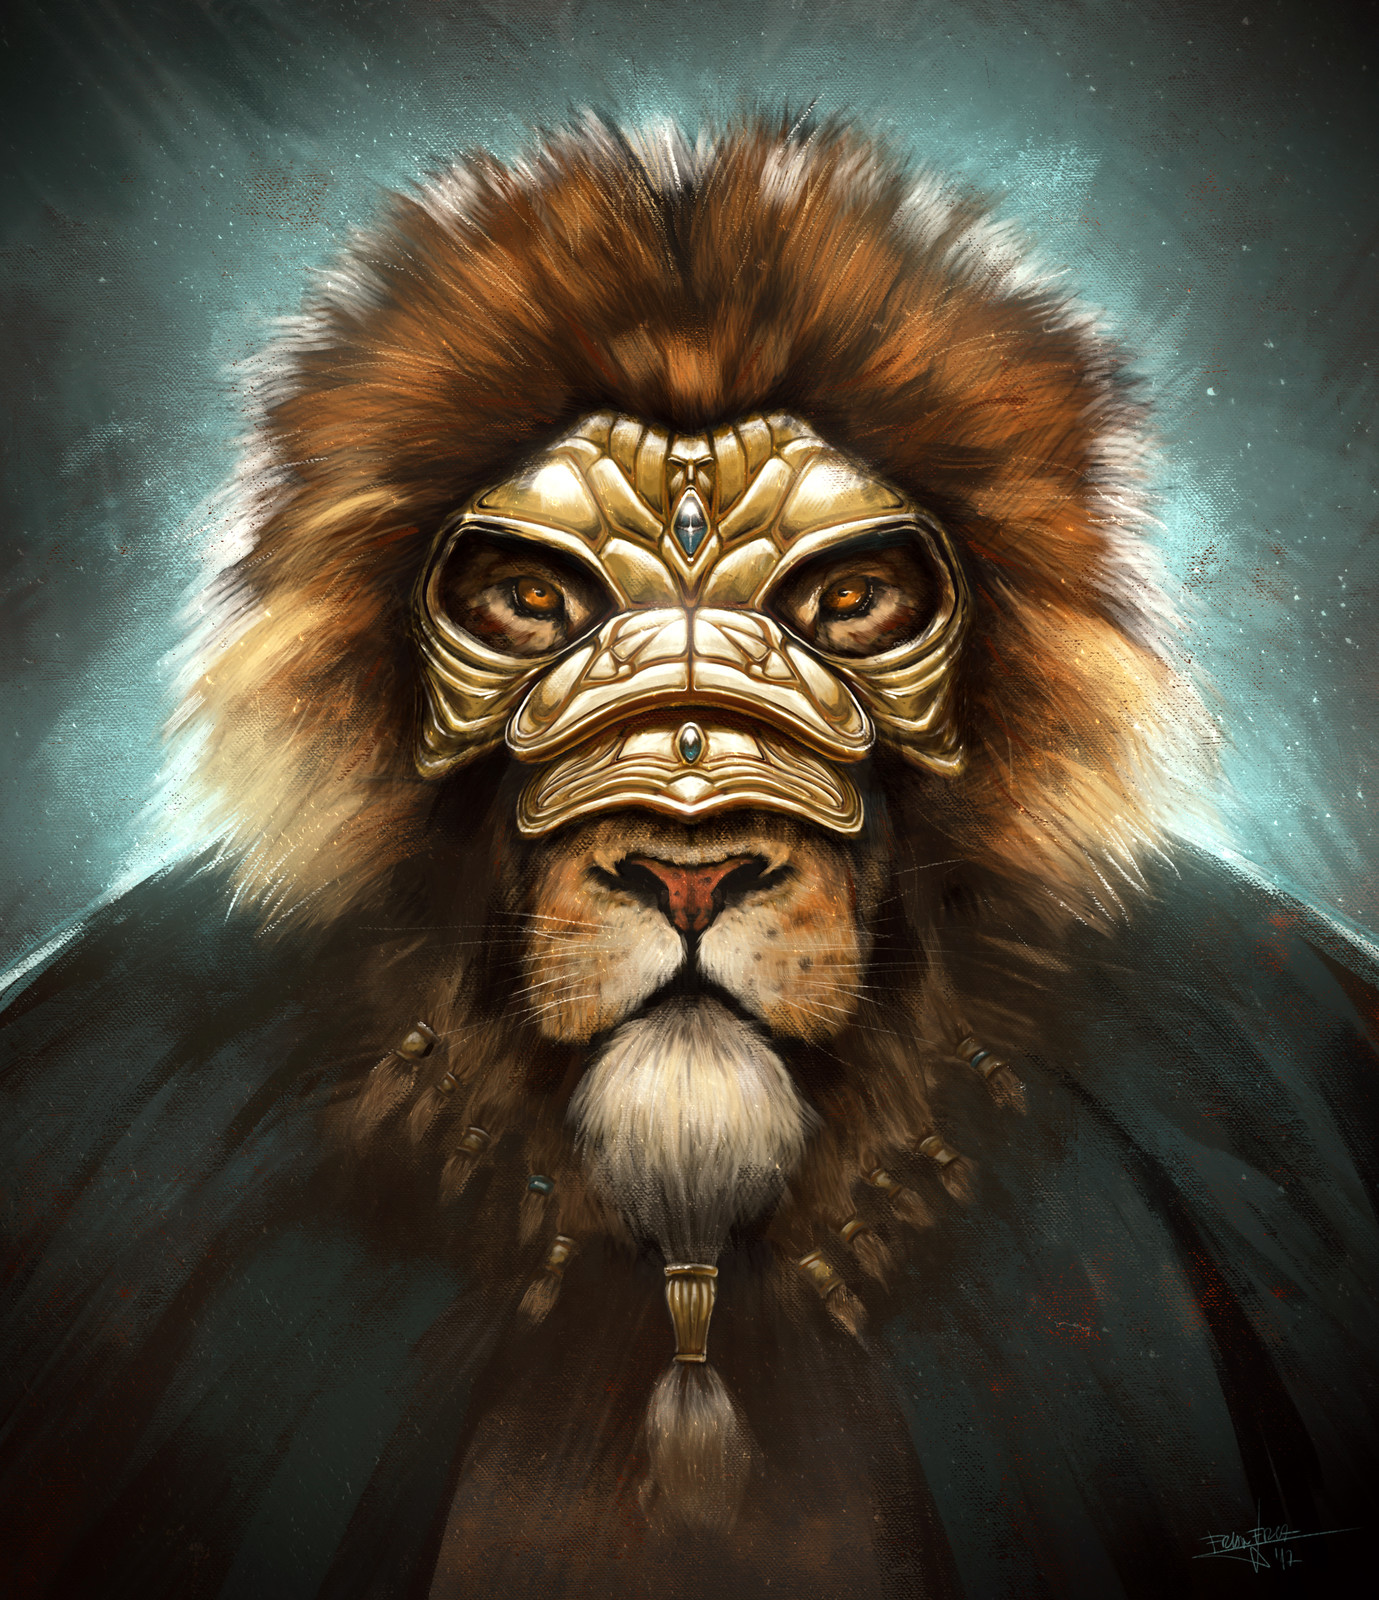 "The Lion Priest"